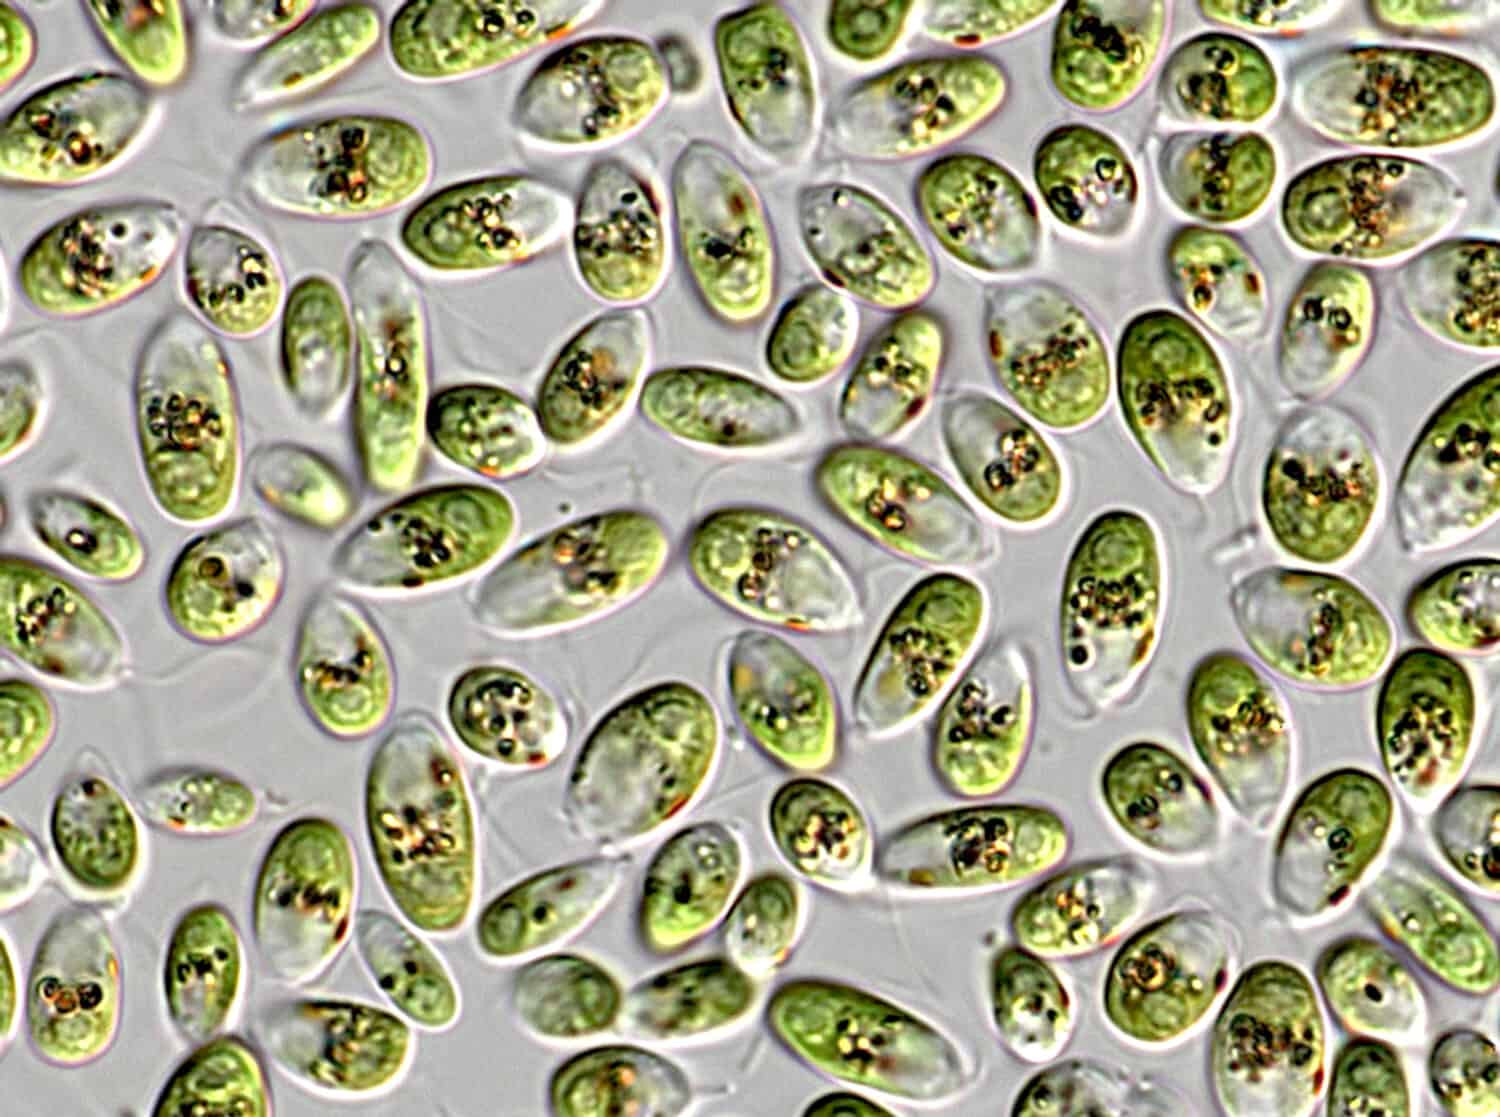 Dunaliella, flagellated green alga (Chlorophyceae, Protista), microscope image of large number of living cells shwoing flagella, cell walls, chloroplasts and eyespots (stigma)